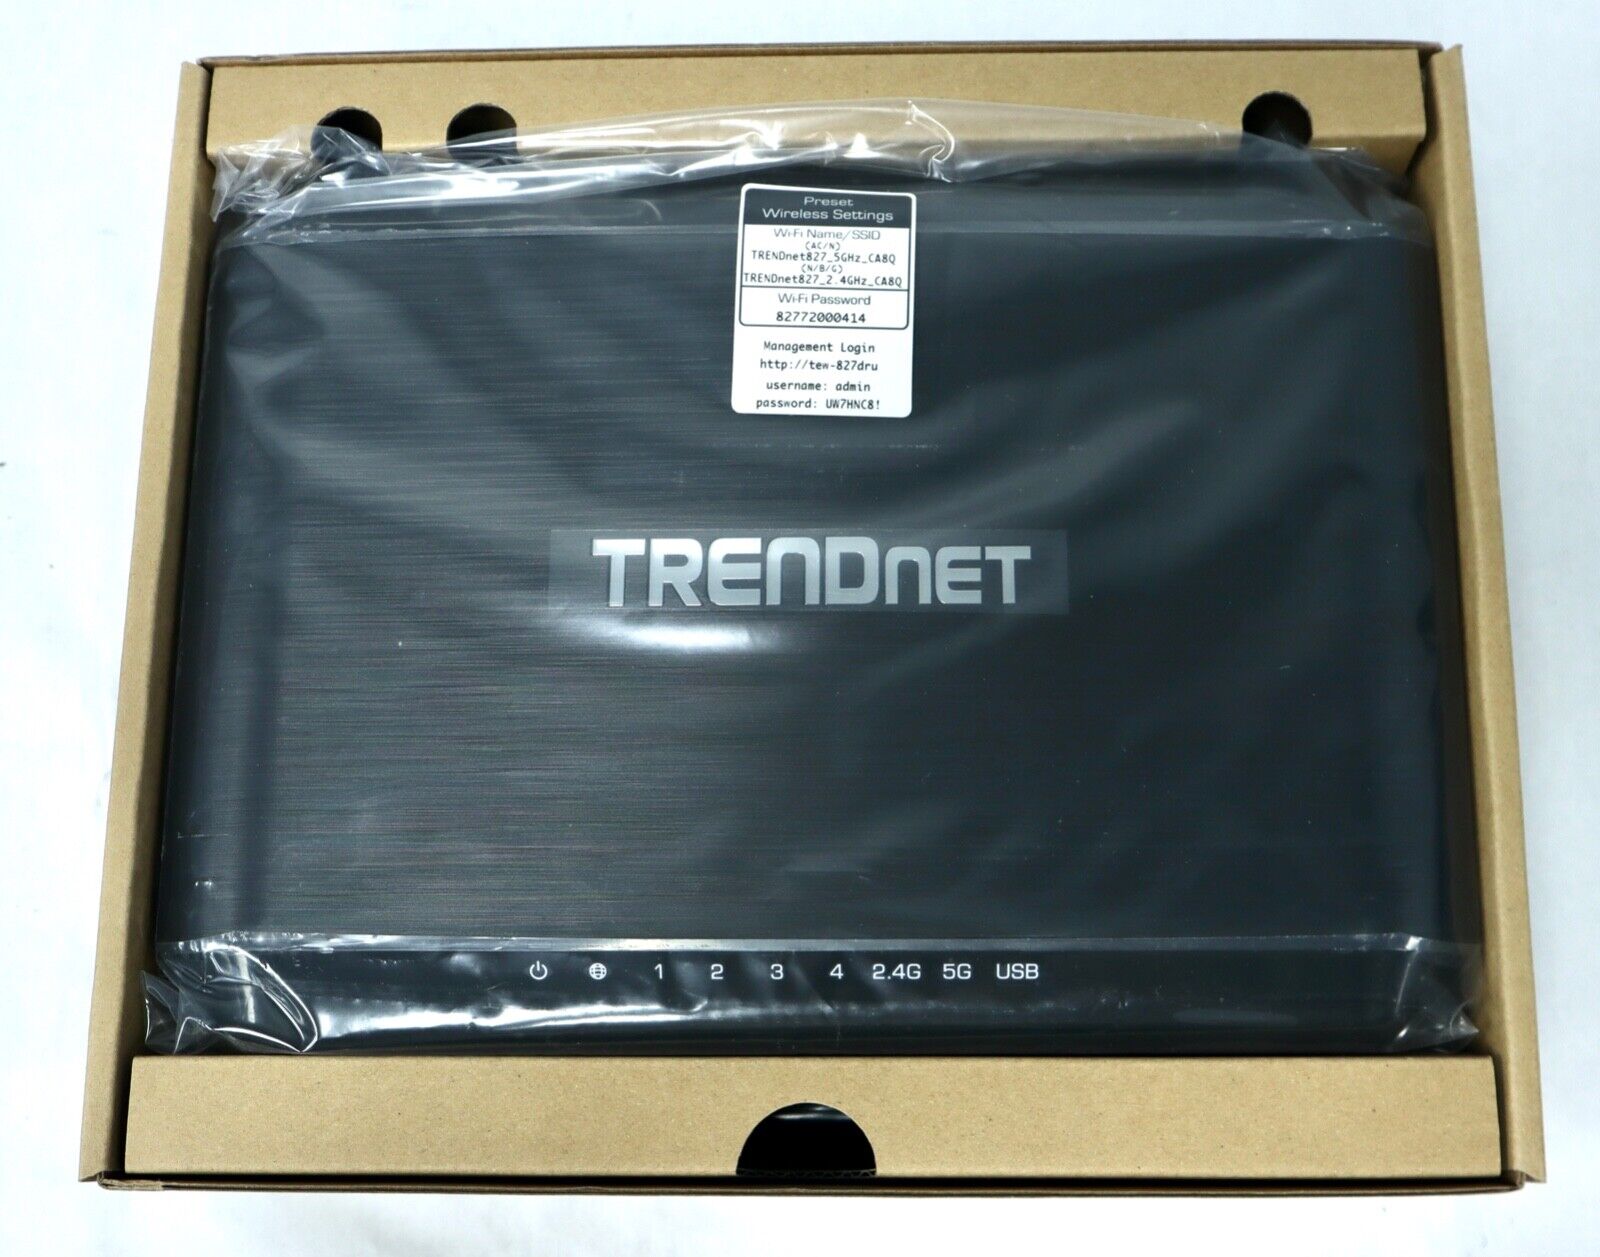 BRAND NEW TRENDnet AC2600 MU-MIMO WiFi Router